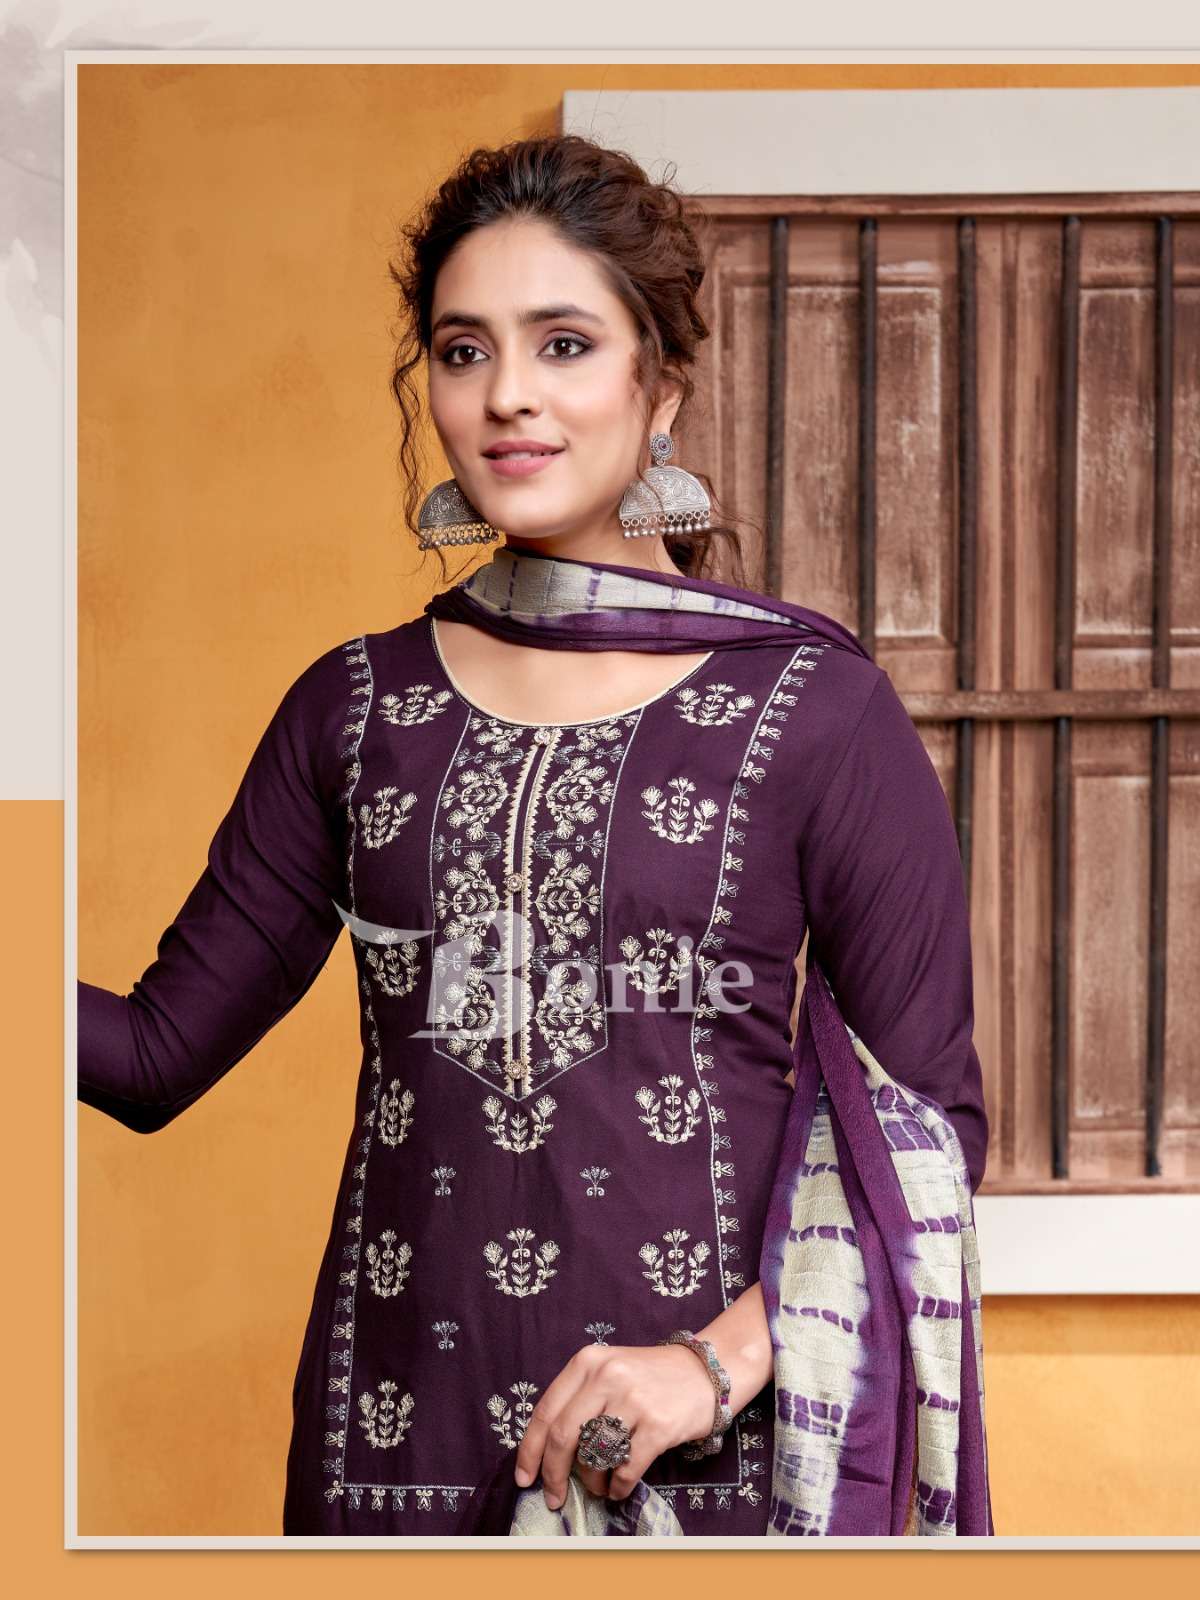 bonie meera vol-11 11001-11008 series kurti skirt with dupatta online price surat